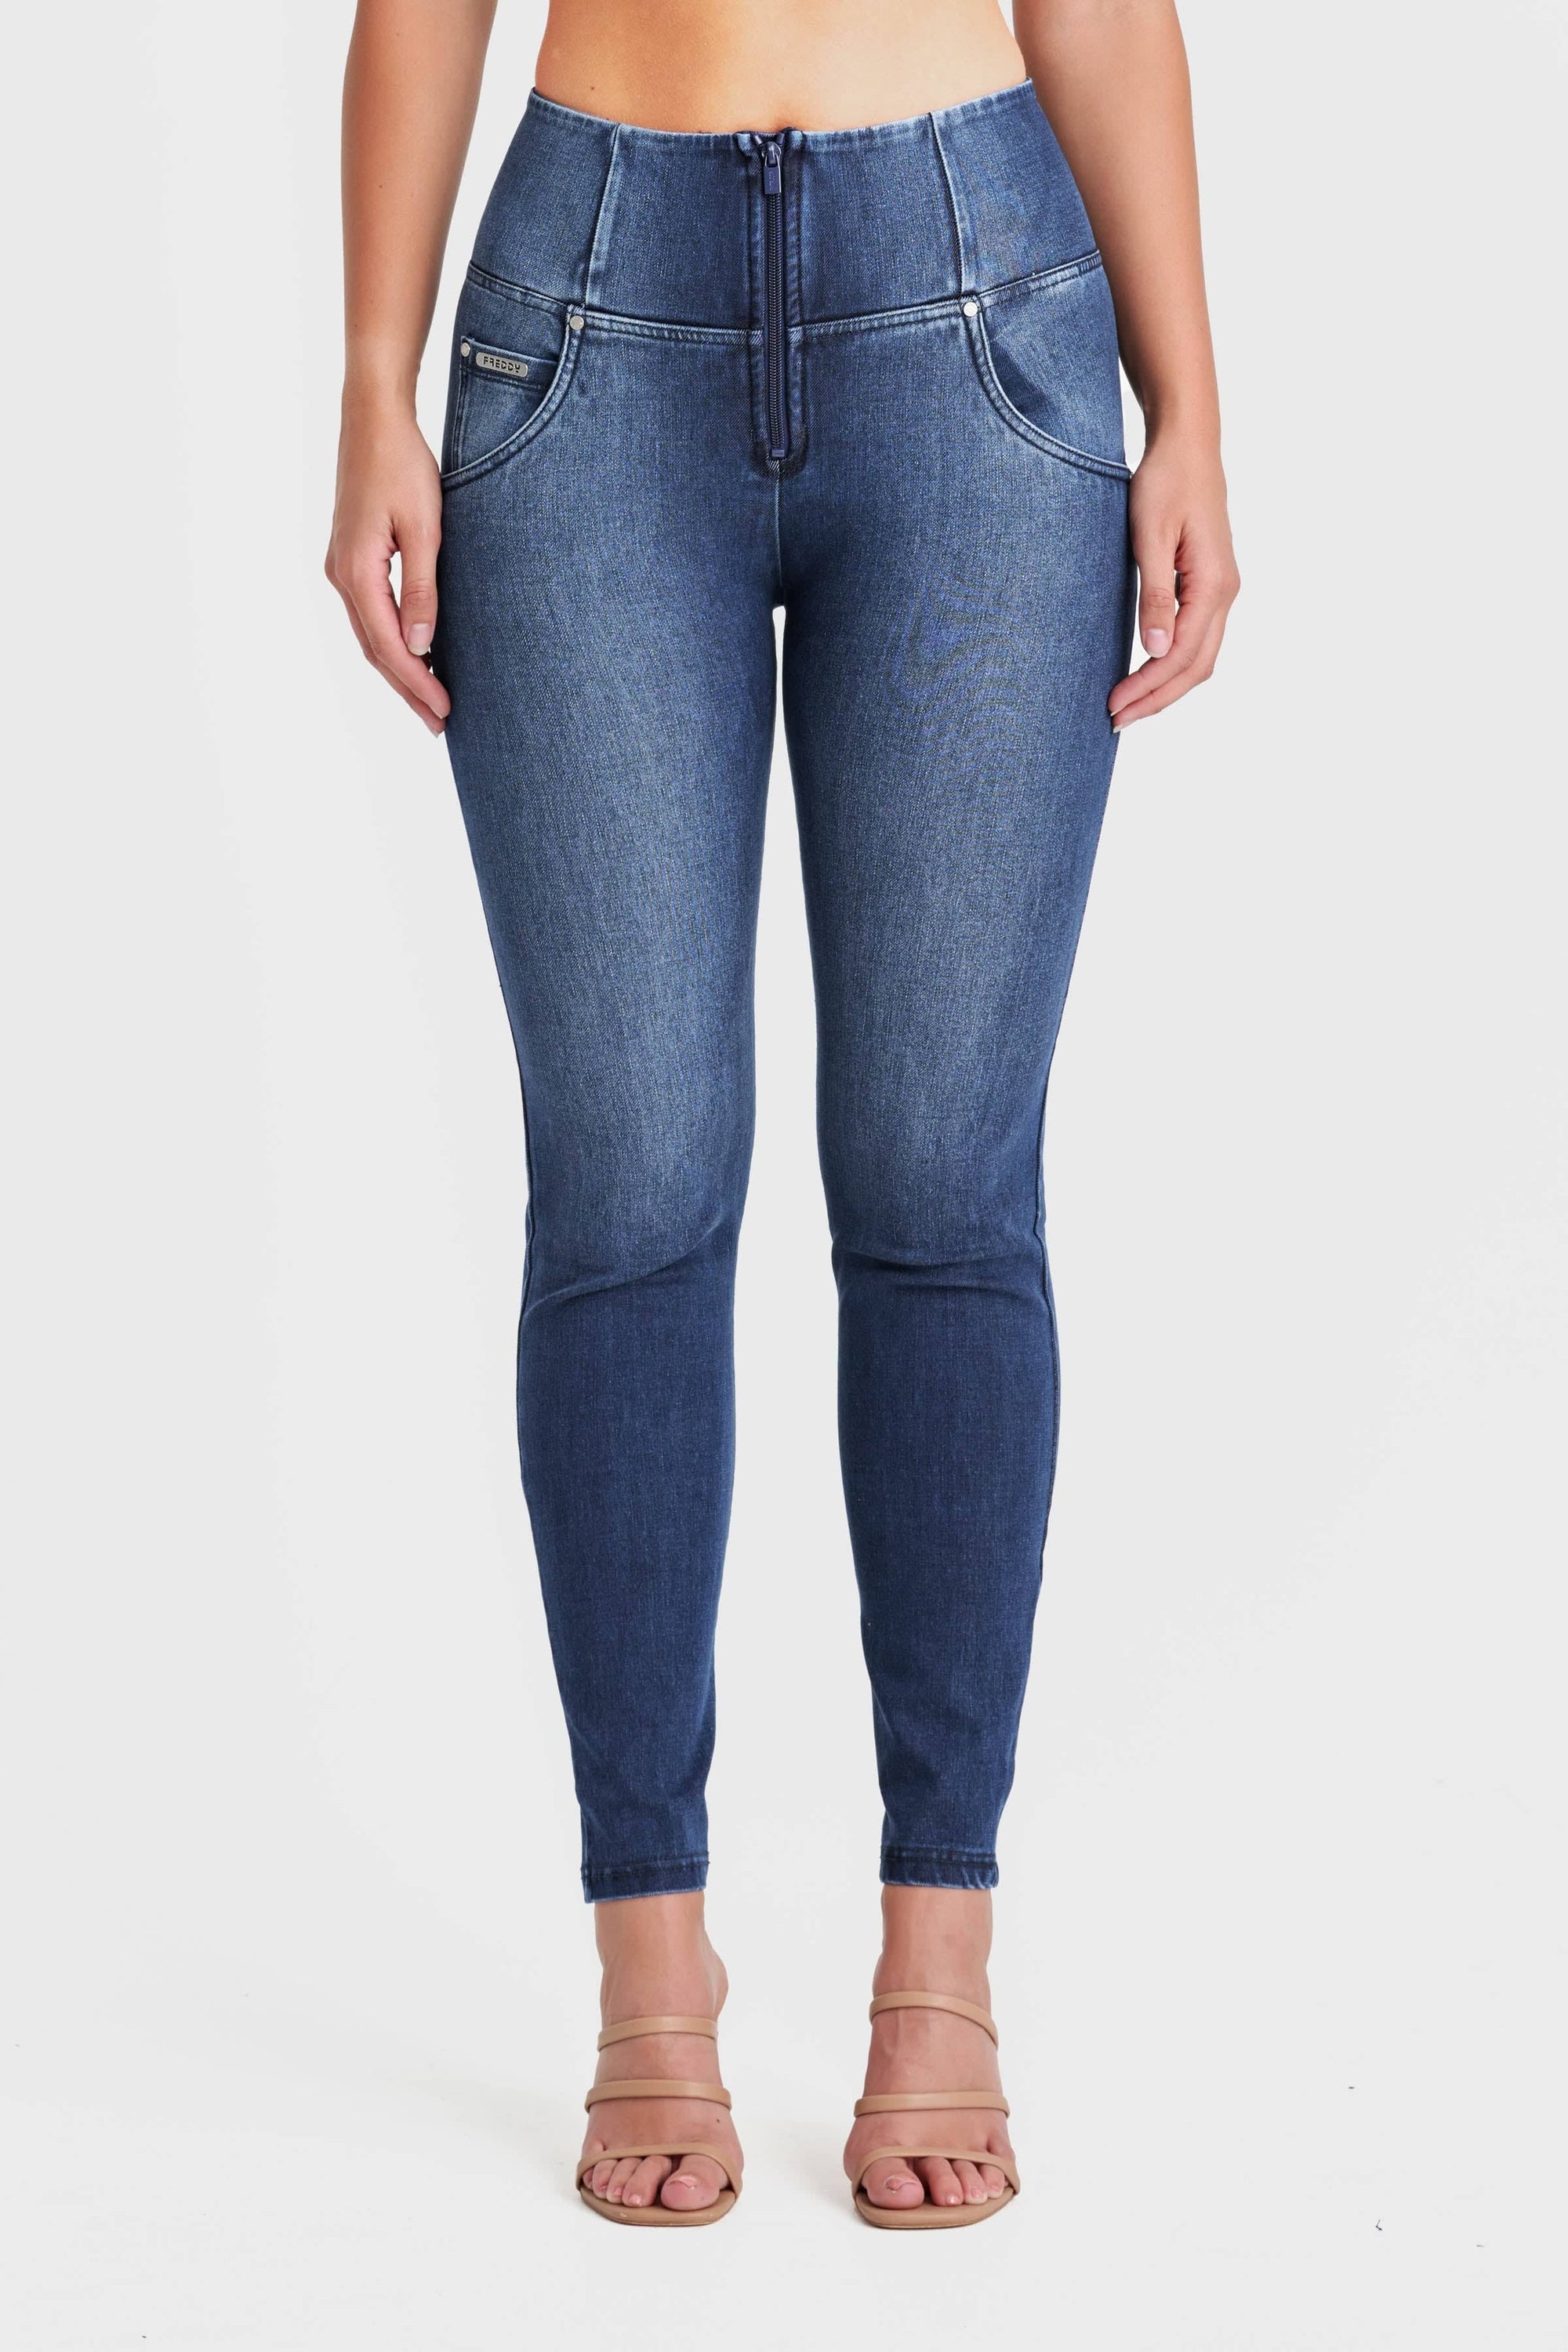 WR.UP® Snug Jeans - High Waisted - Full Length - Dark Blue + Blue Stitching 4